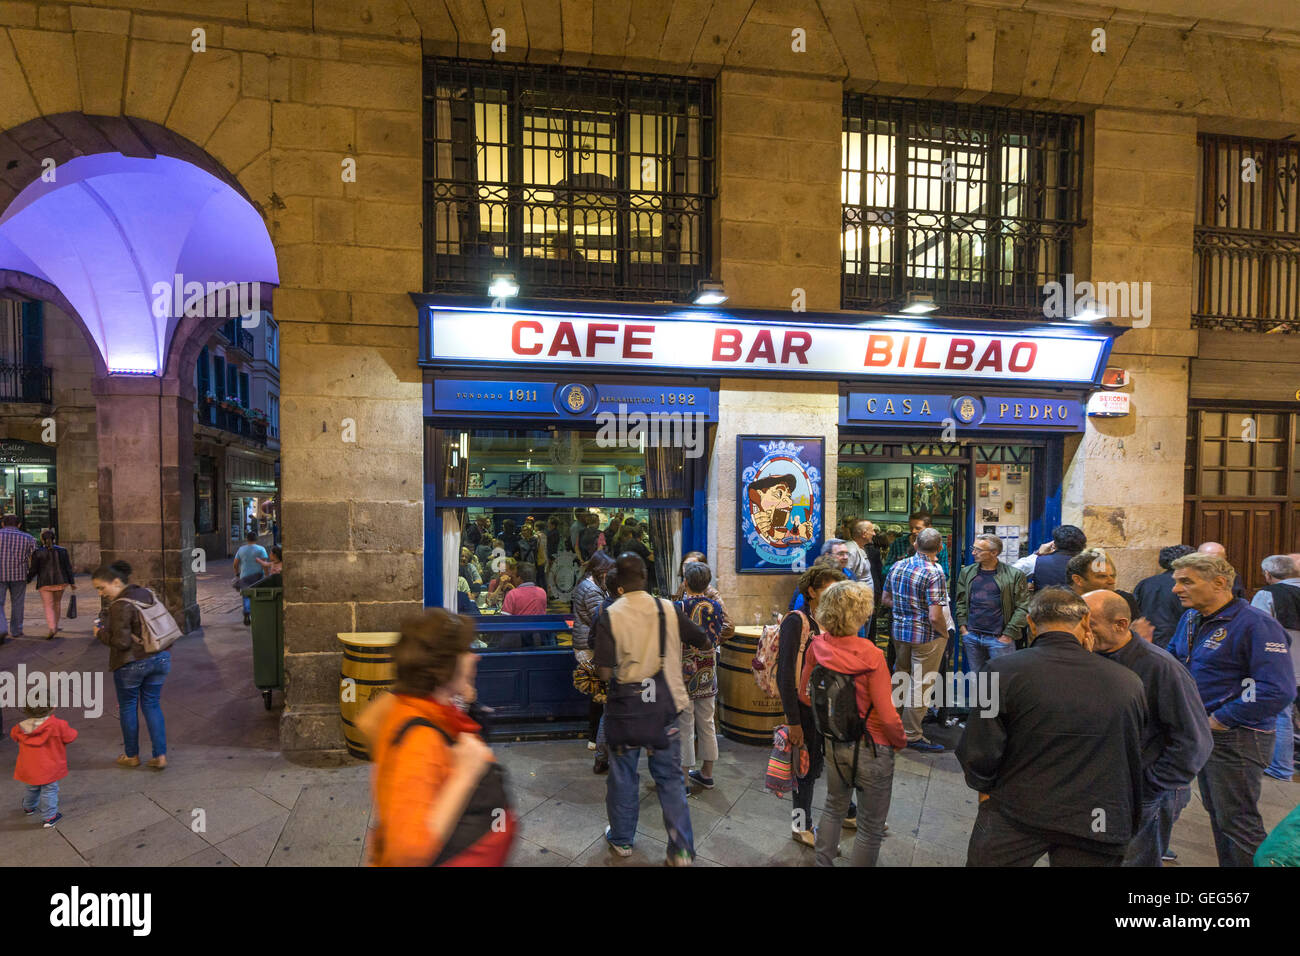 Casa Pedro, Tapaz-Cafe-Bar in Bilbao, Plaza Nueva, Baskisches Land, Spanien Stockfoto